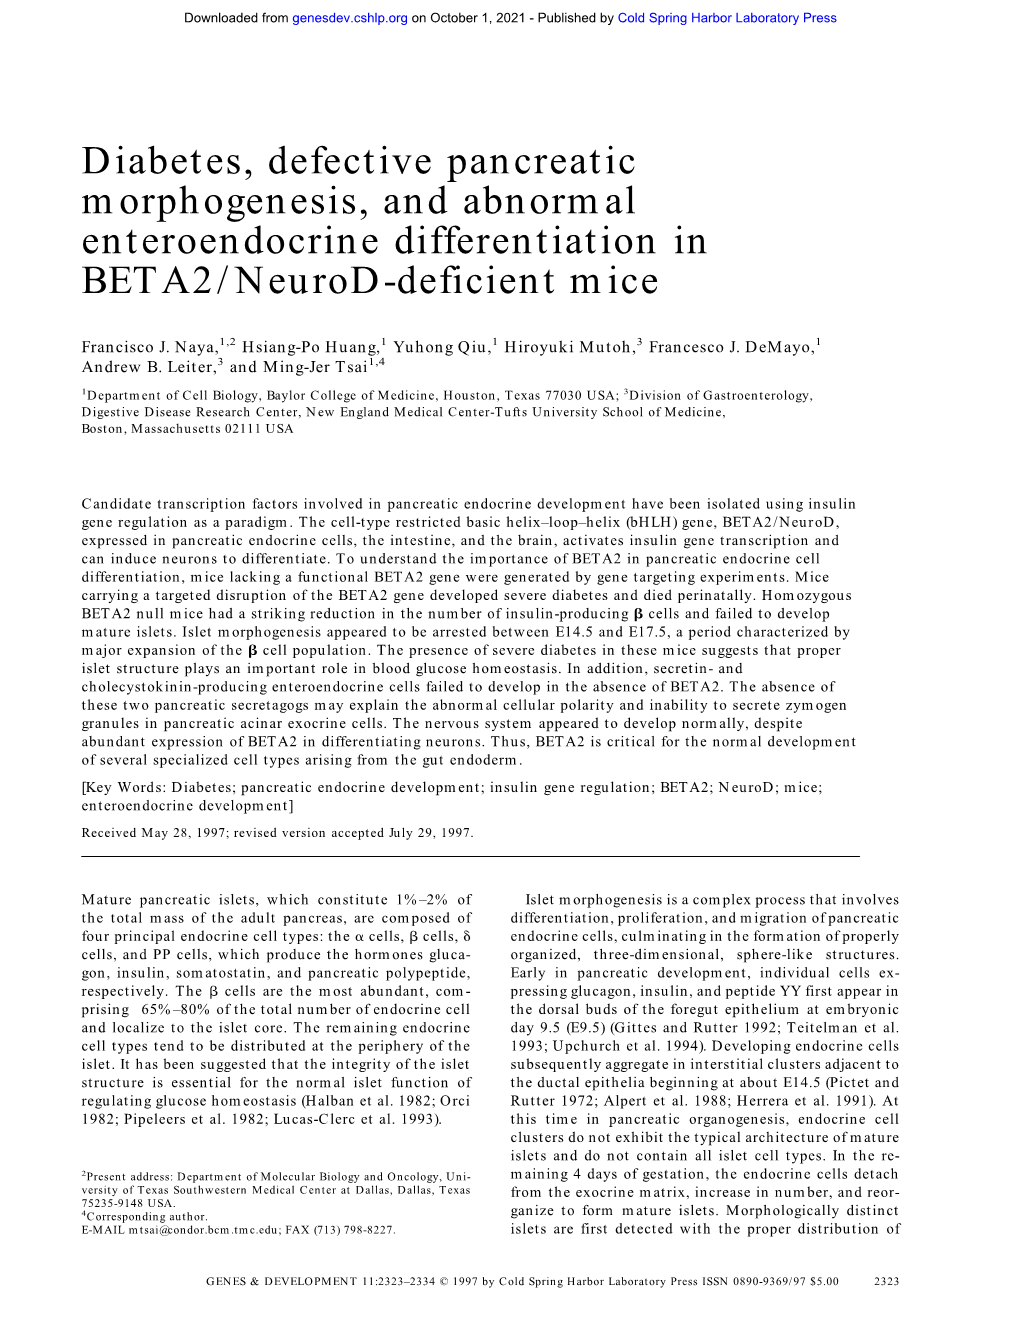 Diabetes, Defective Pancreatic Morphogenesis, and Abnormal Enteroendocrine Differentiation in BETA2/Neurod-Deficient Mice